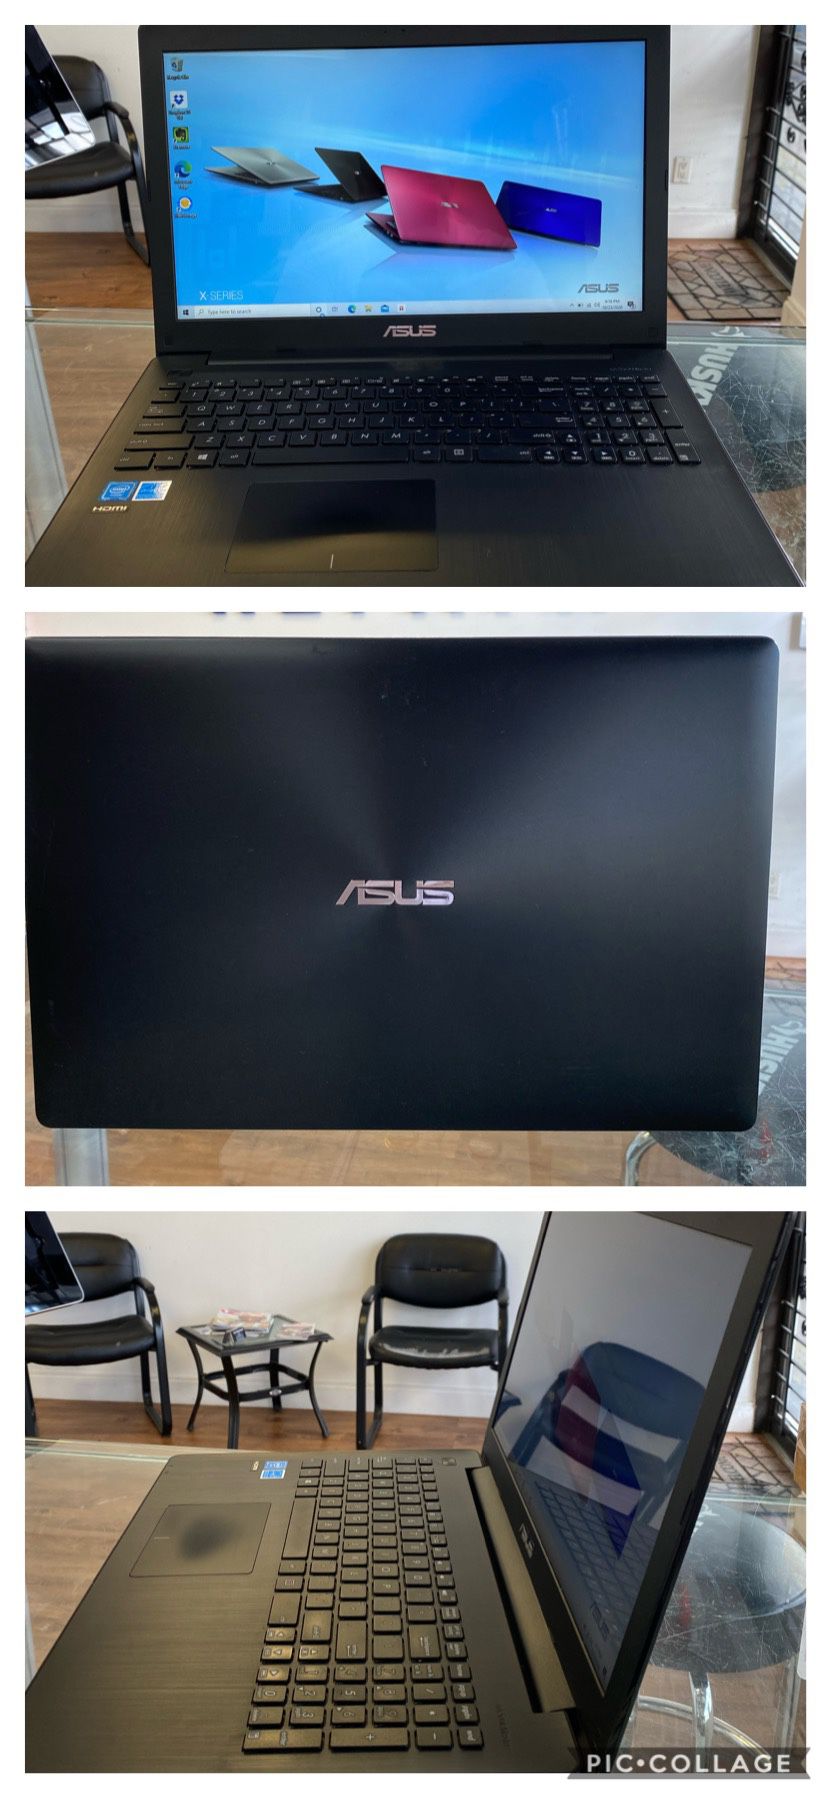 Asus 15.6” laptop. 4gb RAM, 500gb HDD, Windows 10